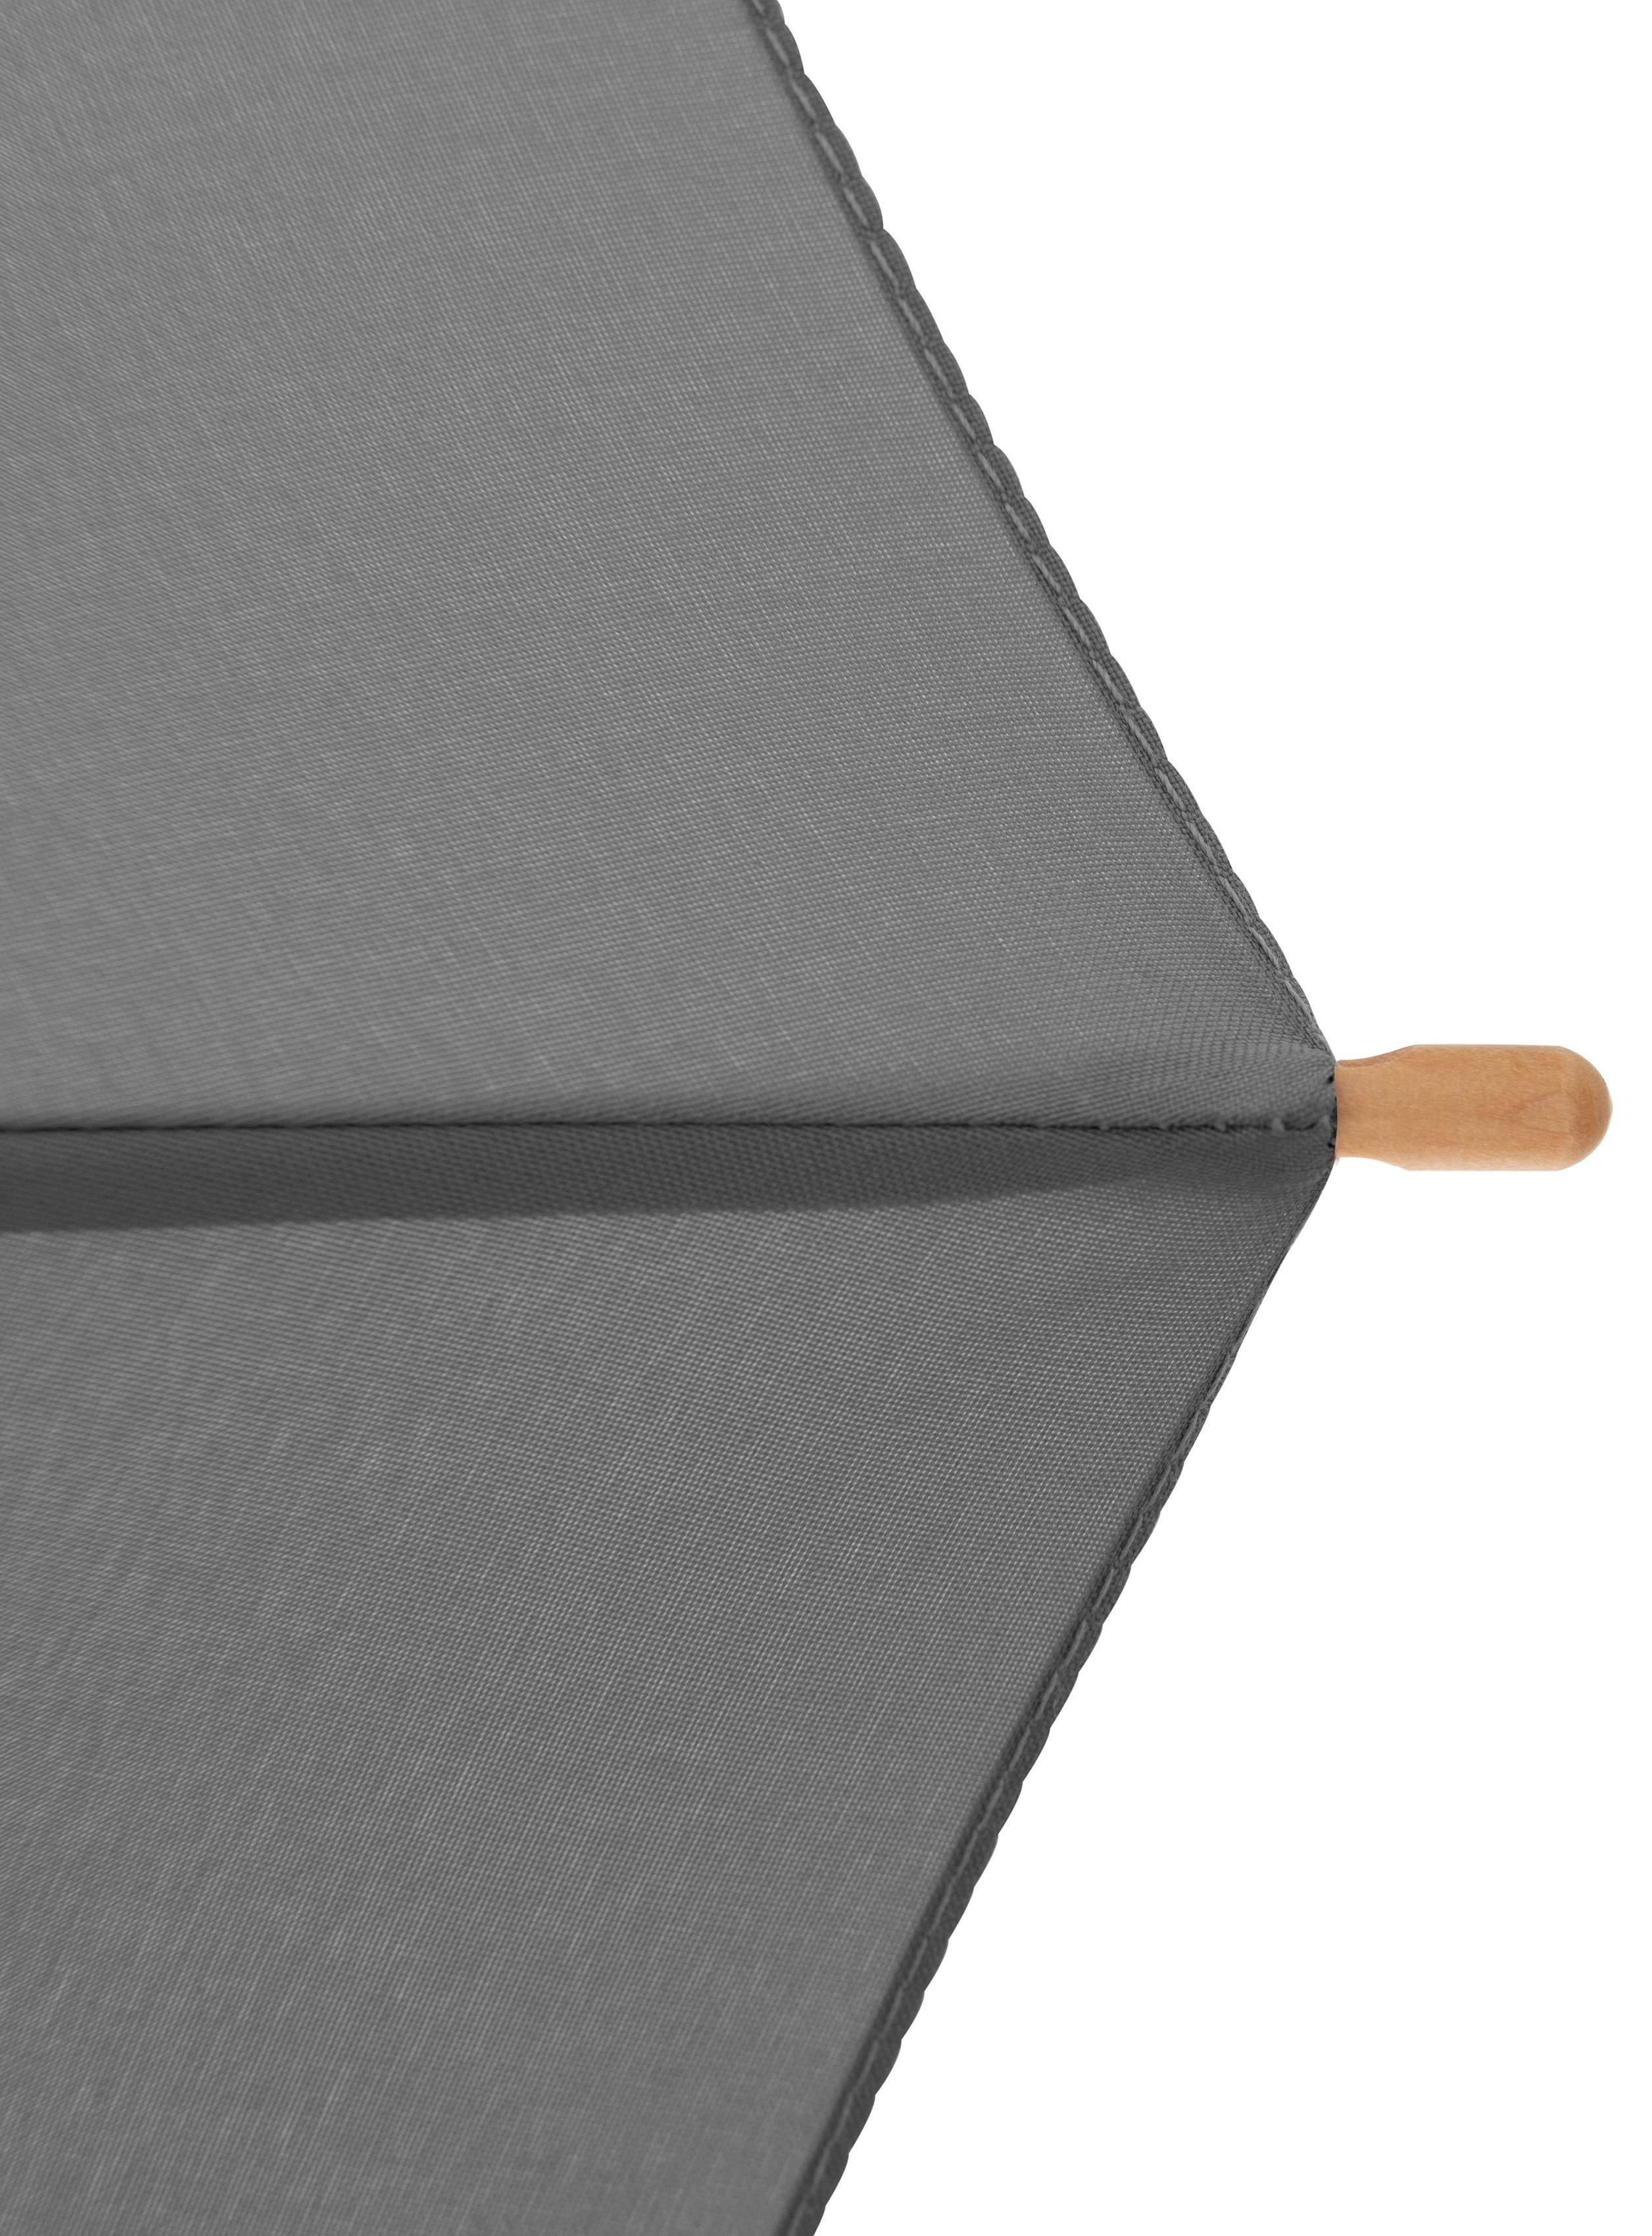 doppler® Stockregenschirm Long, slate Holz nature Material aus aus recyceltem grey, mit Schirmgriff